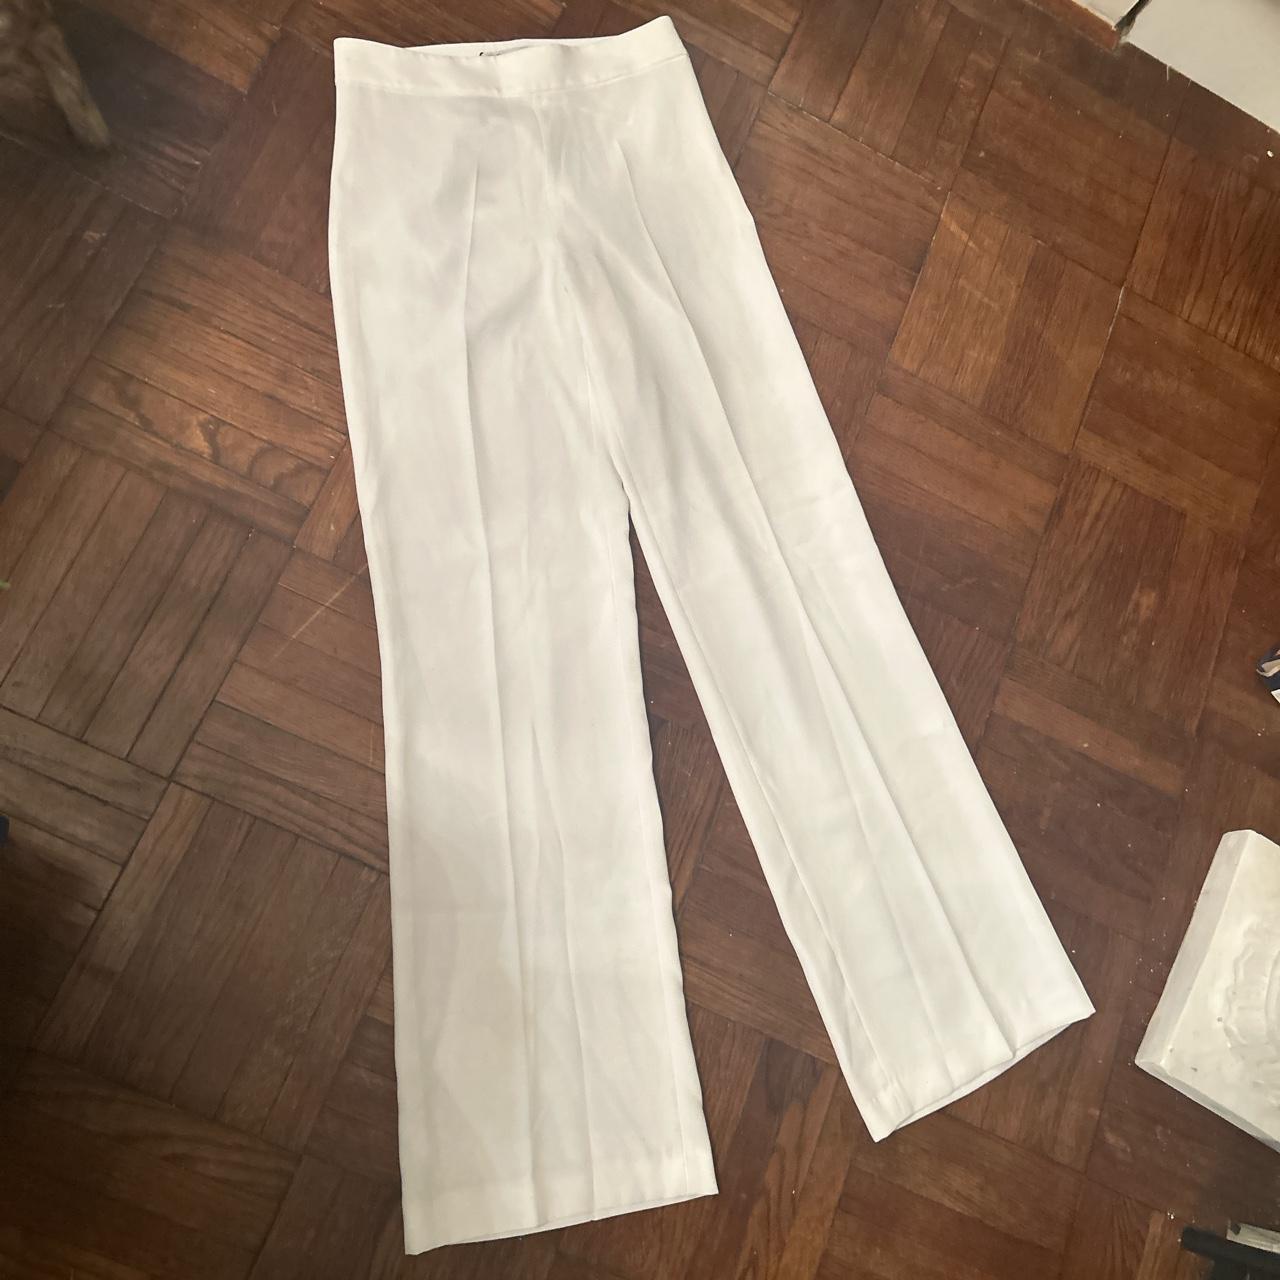 NWT Zara Mid-rise printed pants with adjustable - Depop